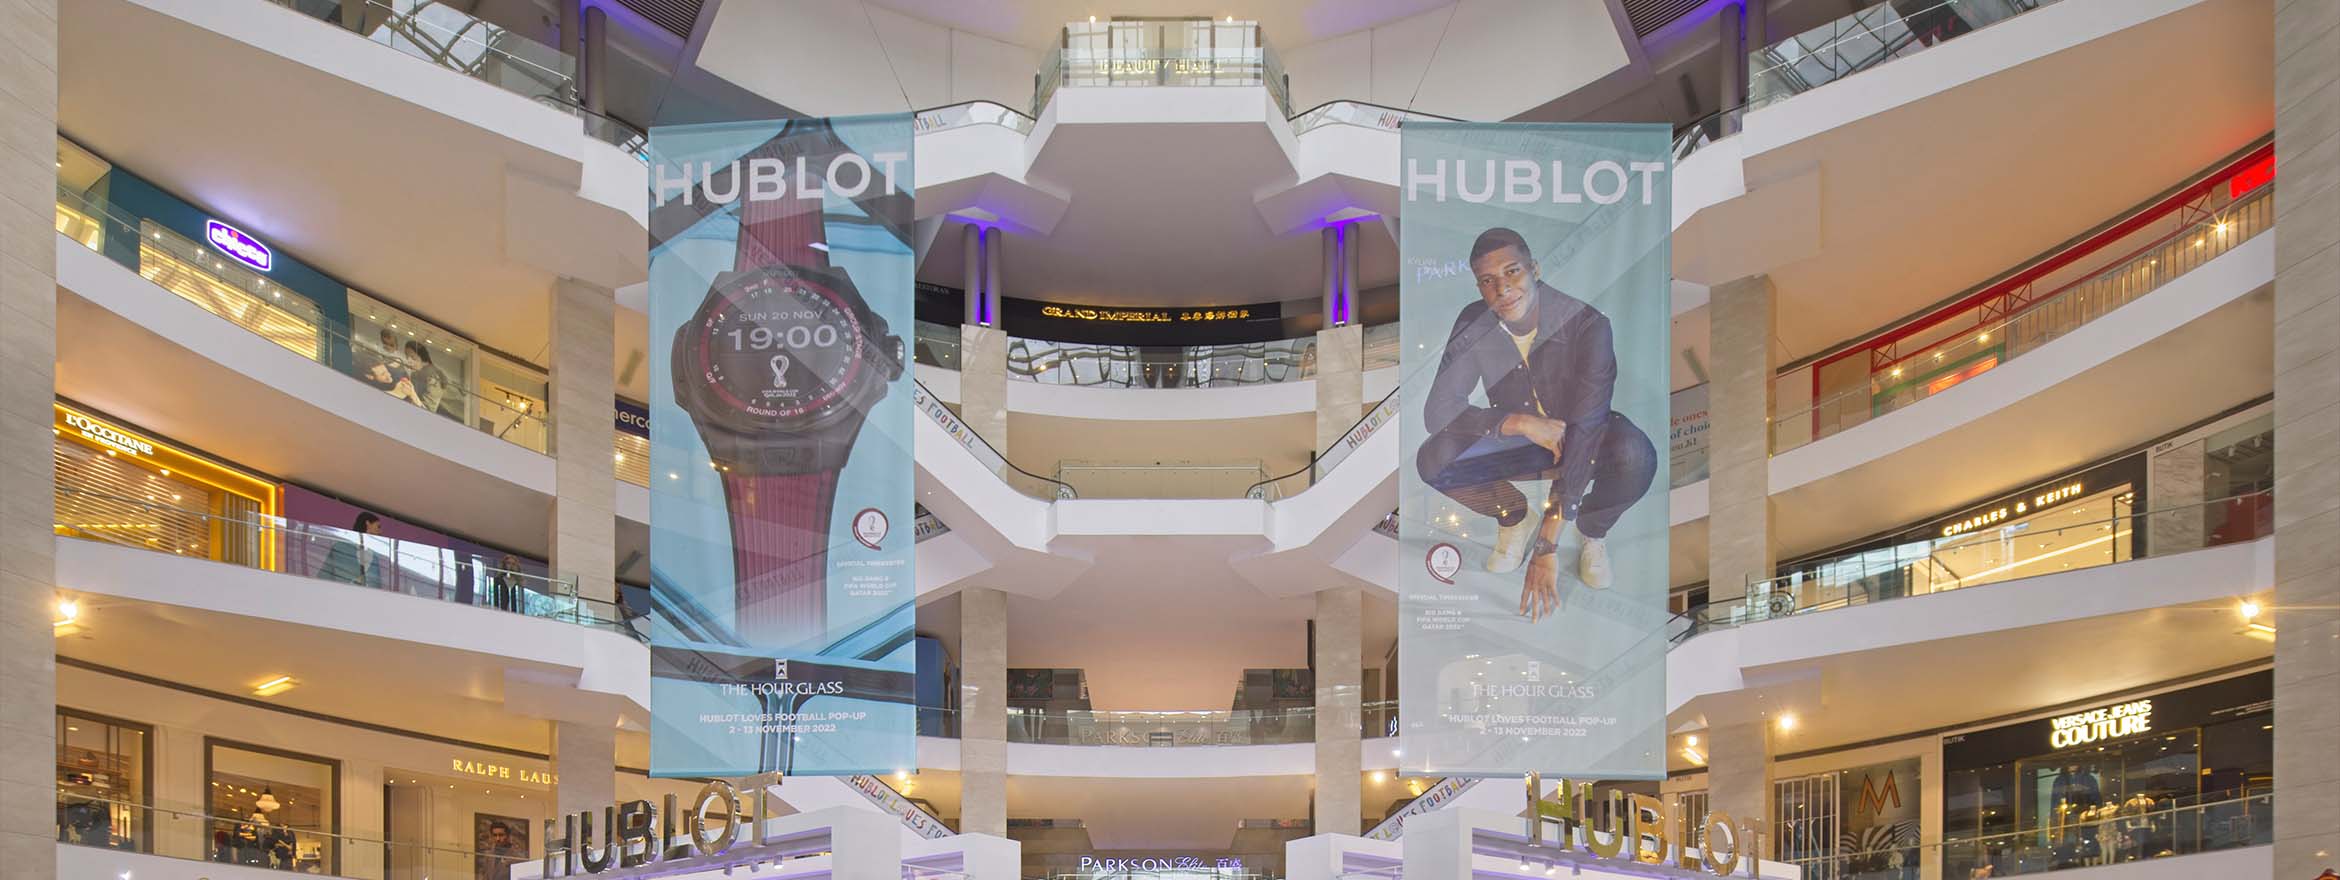 Hublot Welcomes FIFA World Cup Qatar 2022™ with the Hublot Loves Football Pop-Up at Pavilion Kuala Lumpur